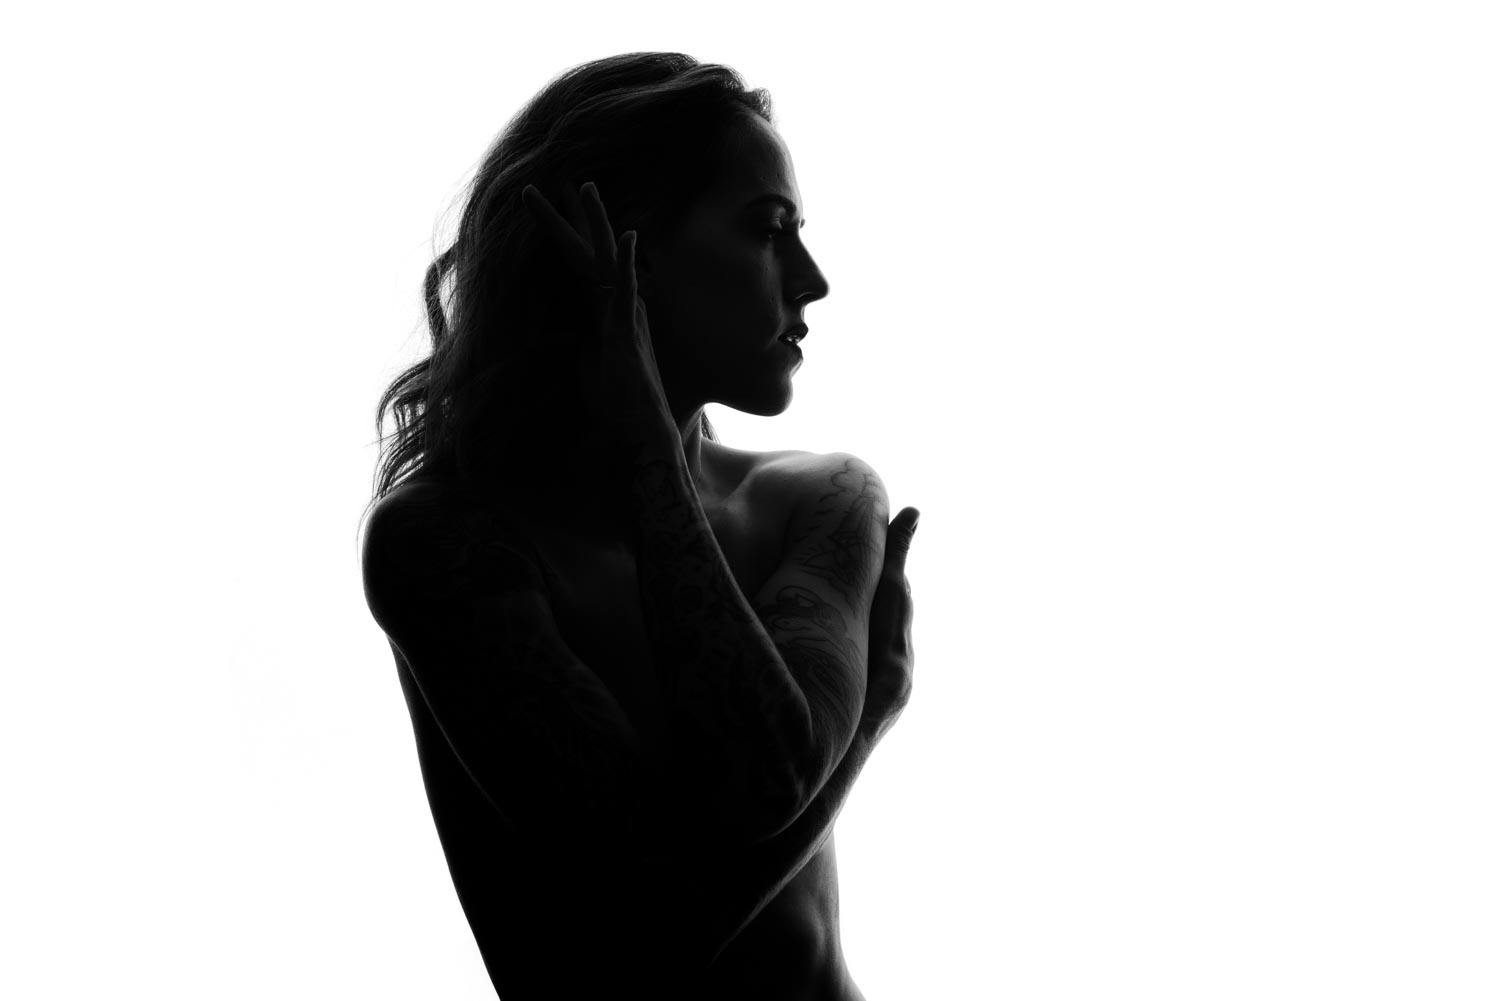 a silhouette portrait of Christina in black and white.